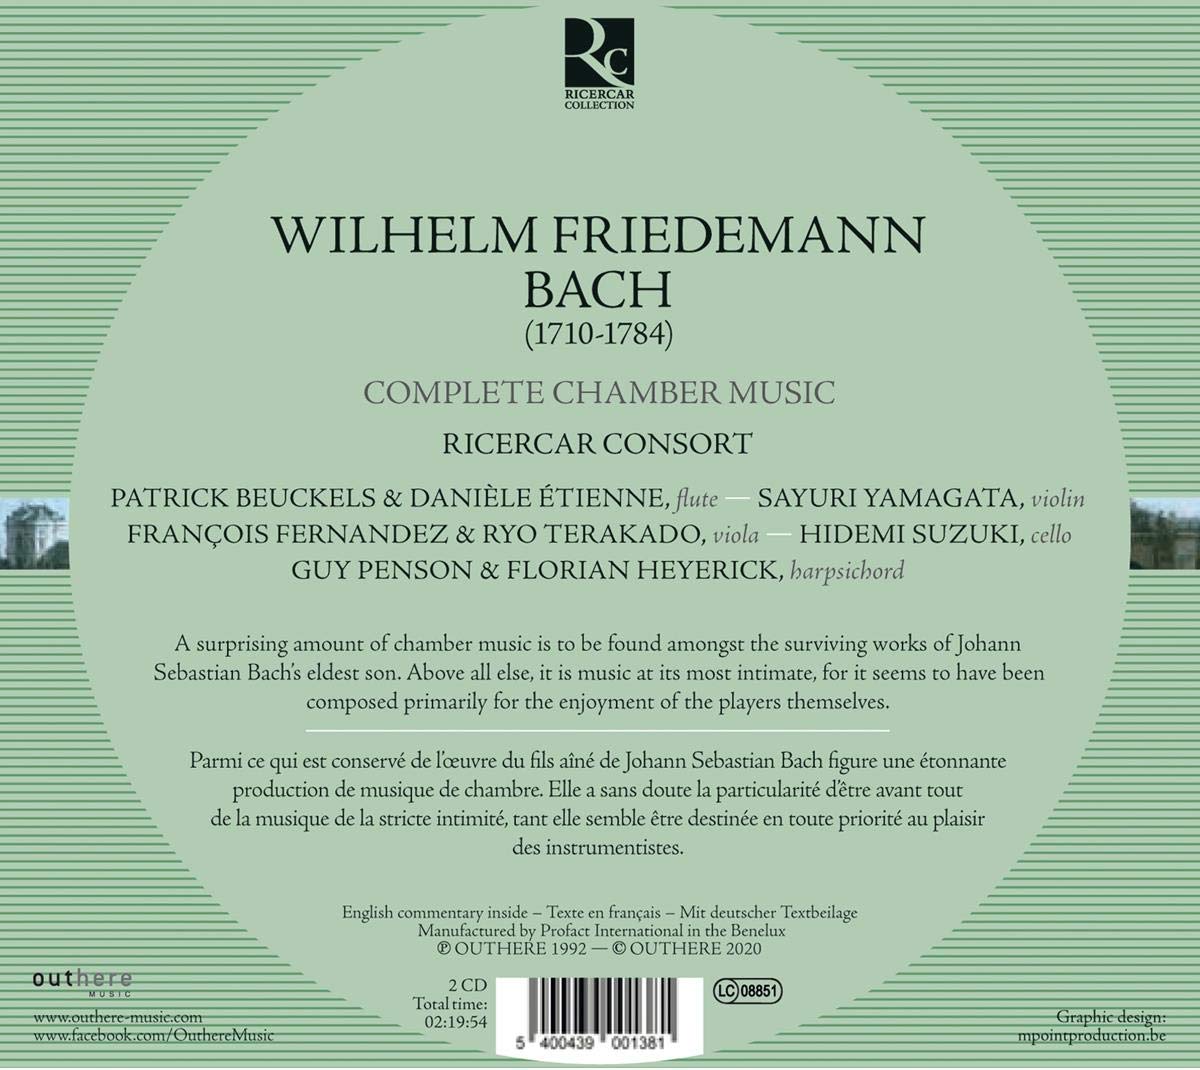 Ricercar Consort 빌헬름 프리데만 바흐: 실내악 전곡집 (W. F. Bach: Complete Chamber Music)